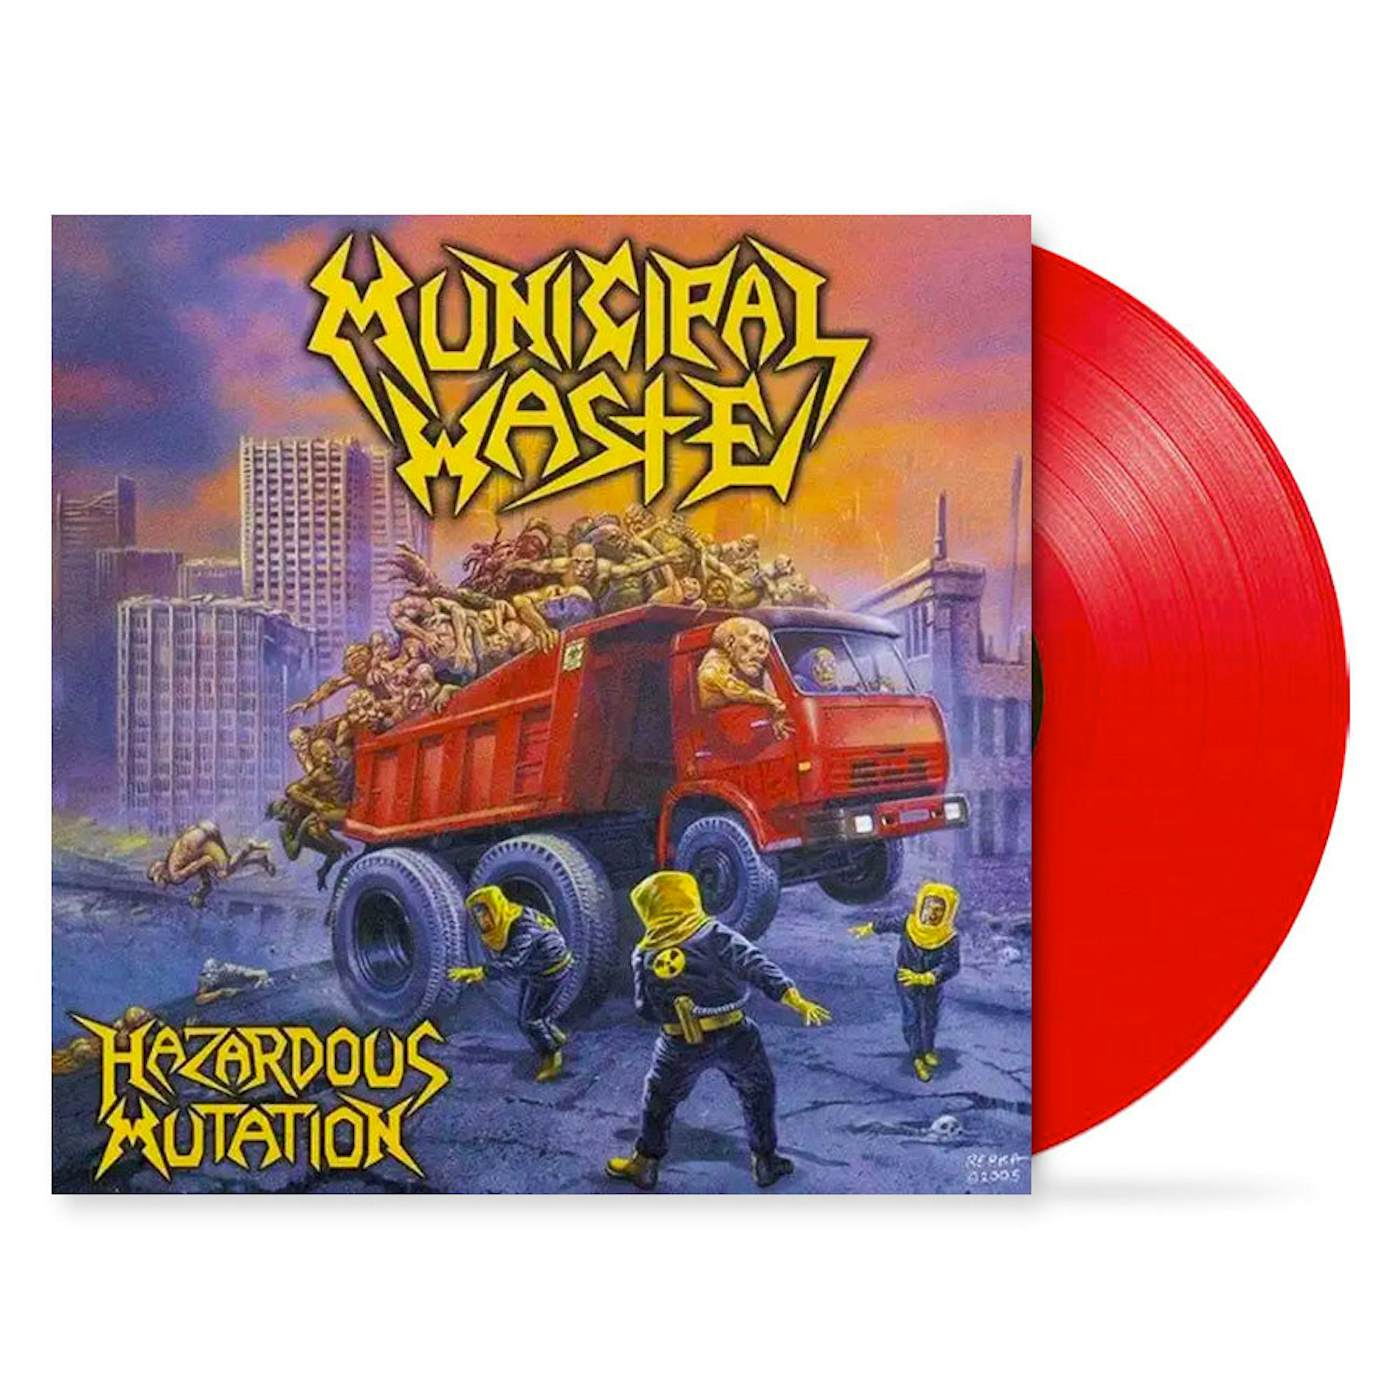 Municipal Waste "Hazardous Mutation" 12" (Vinyl)